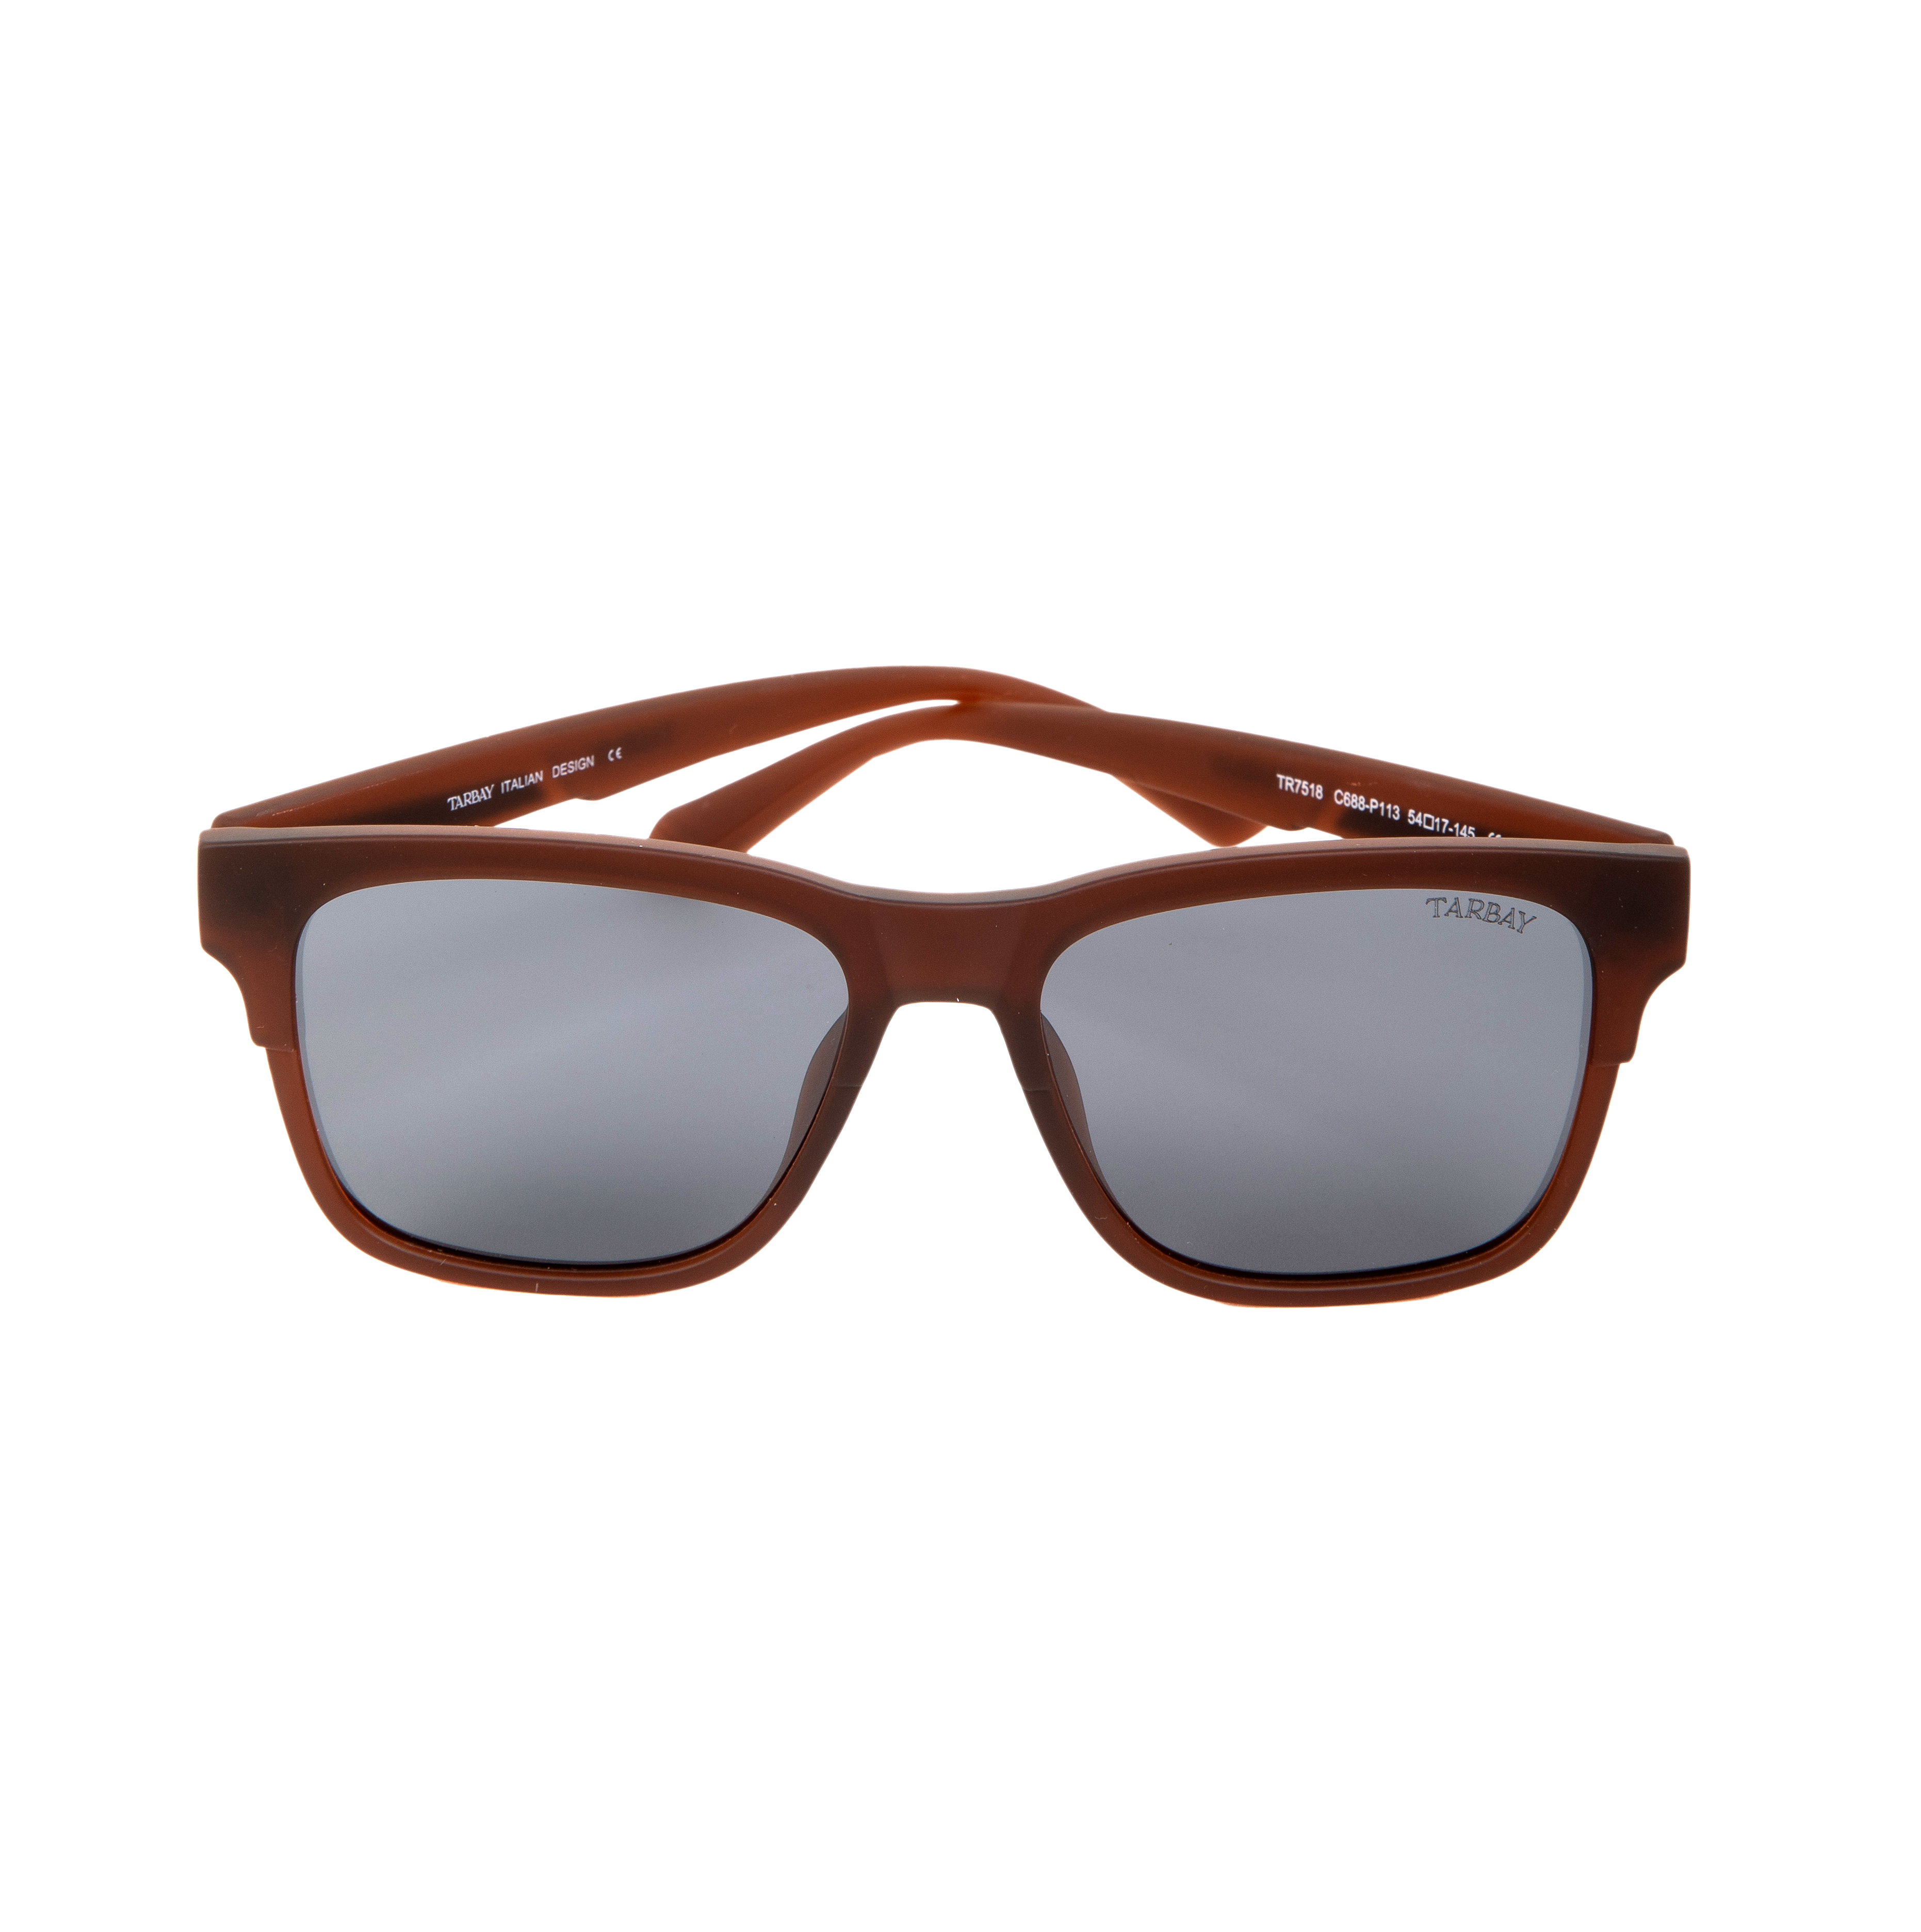 Parasol #10 - Brown SunGlasses TARBAY   